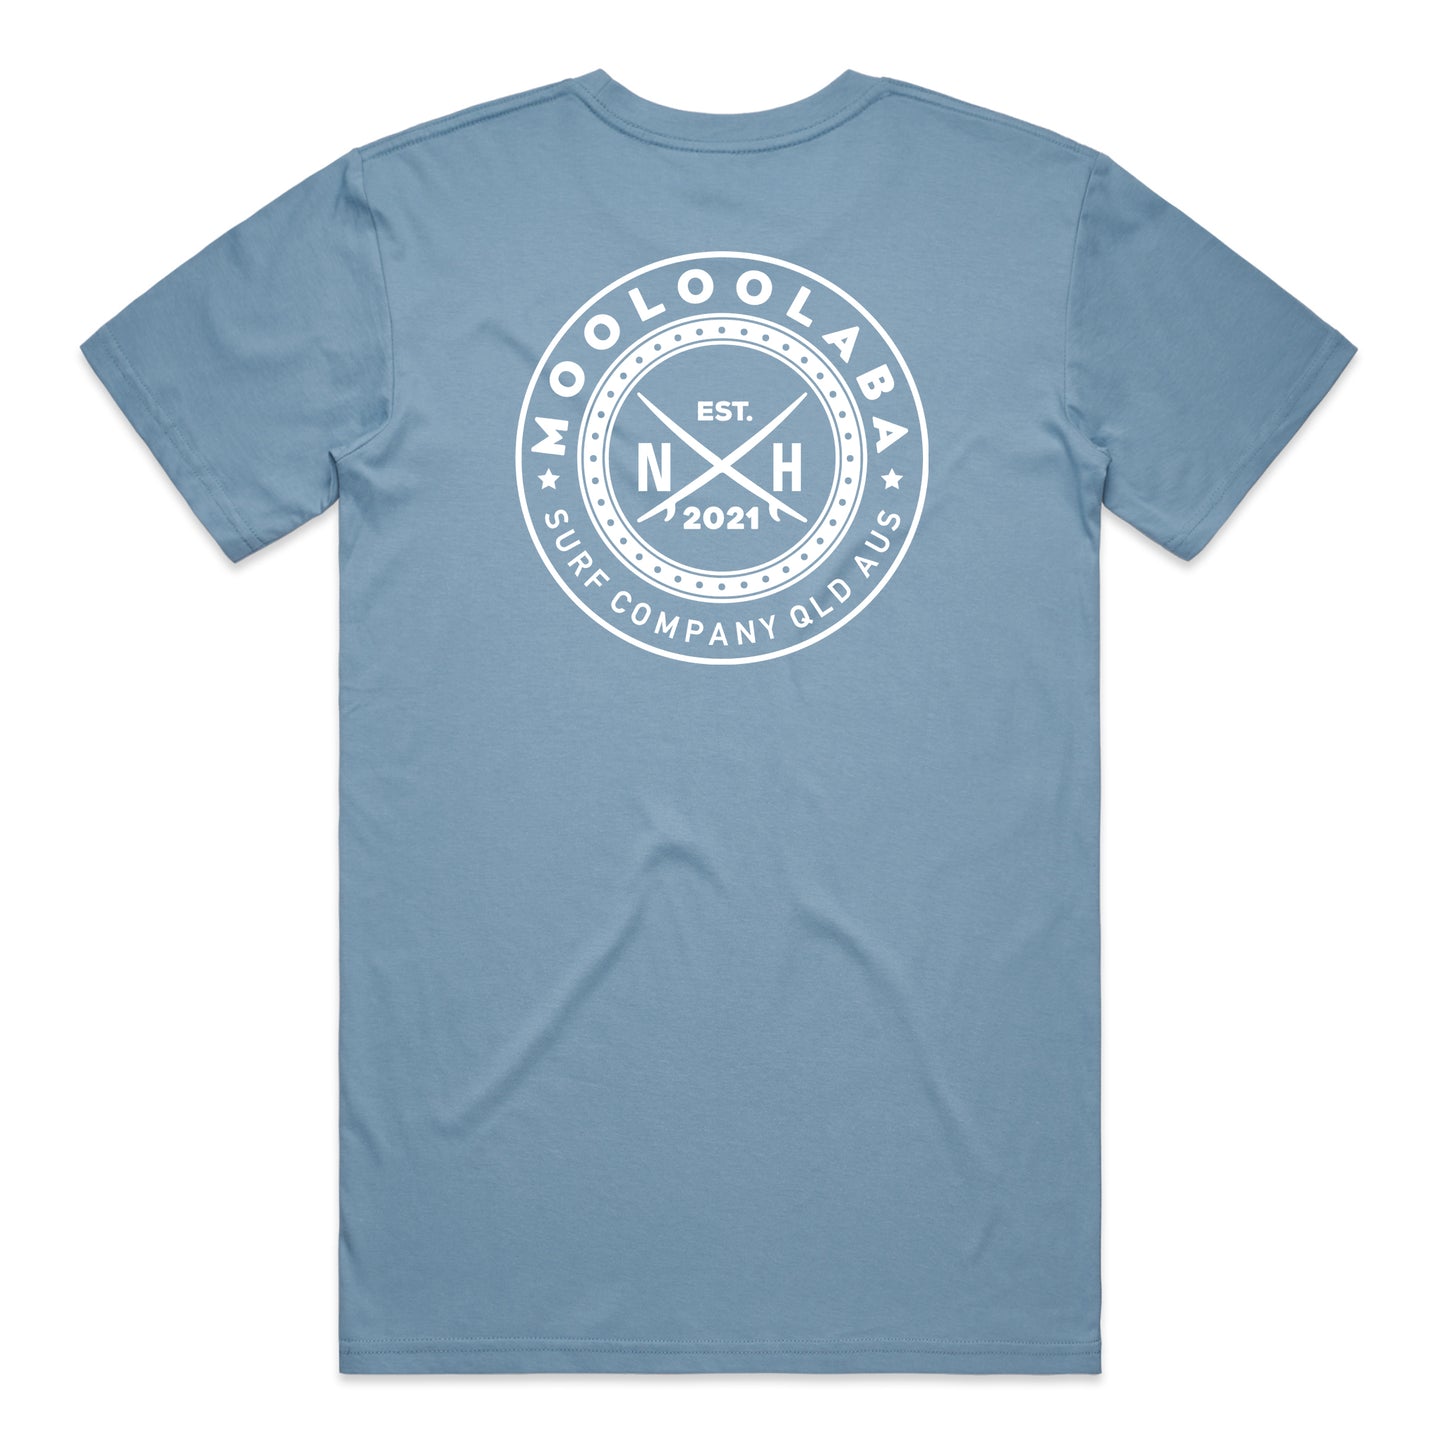 Mooloolaba Badge T-shirt - Carolina Blue